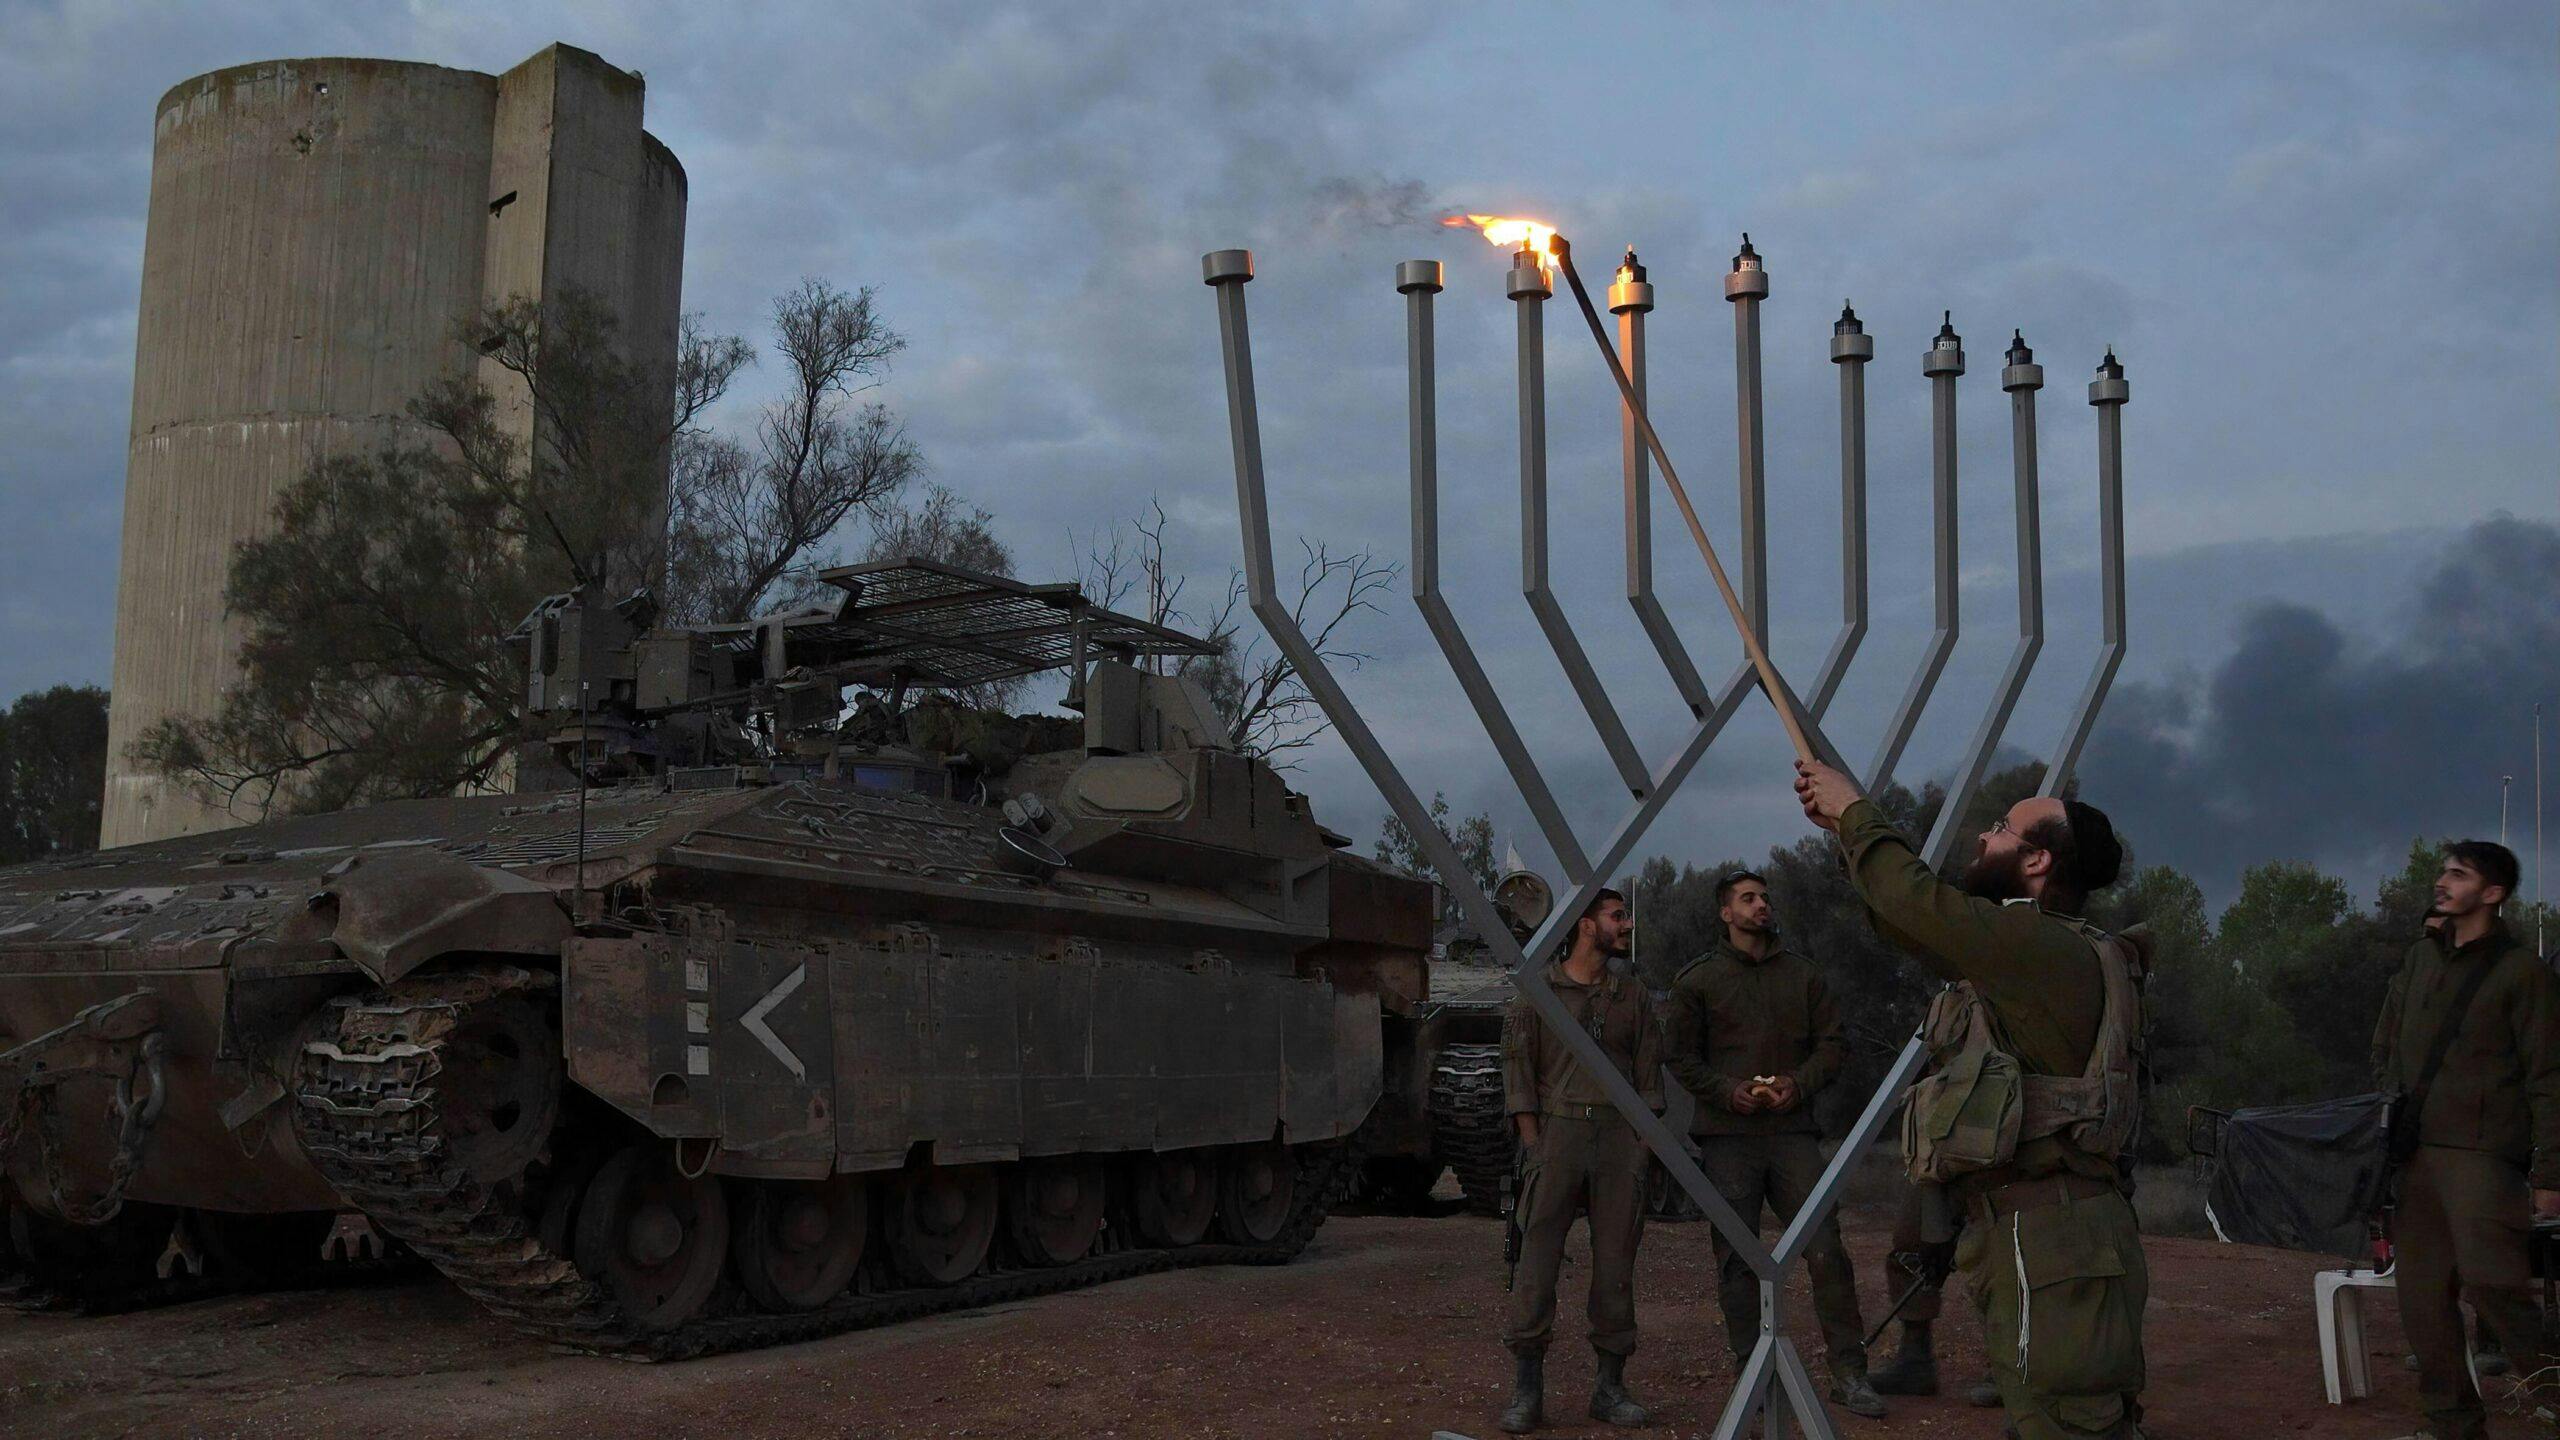 Man in army uniform lights large Chanukah menorah in front of tank